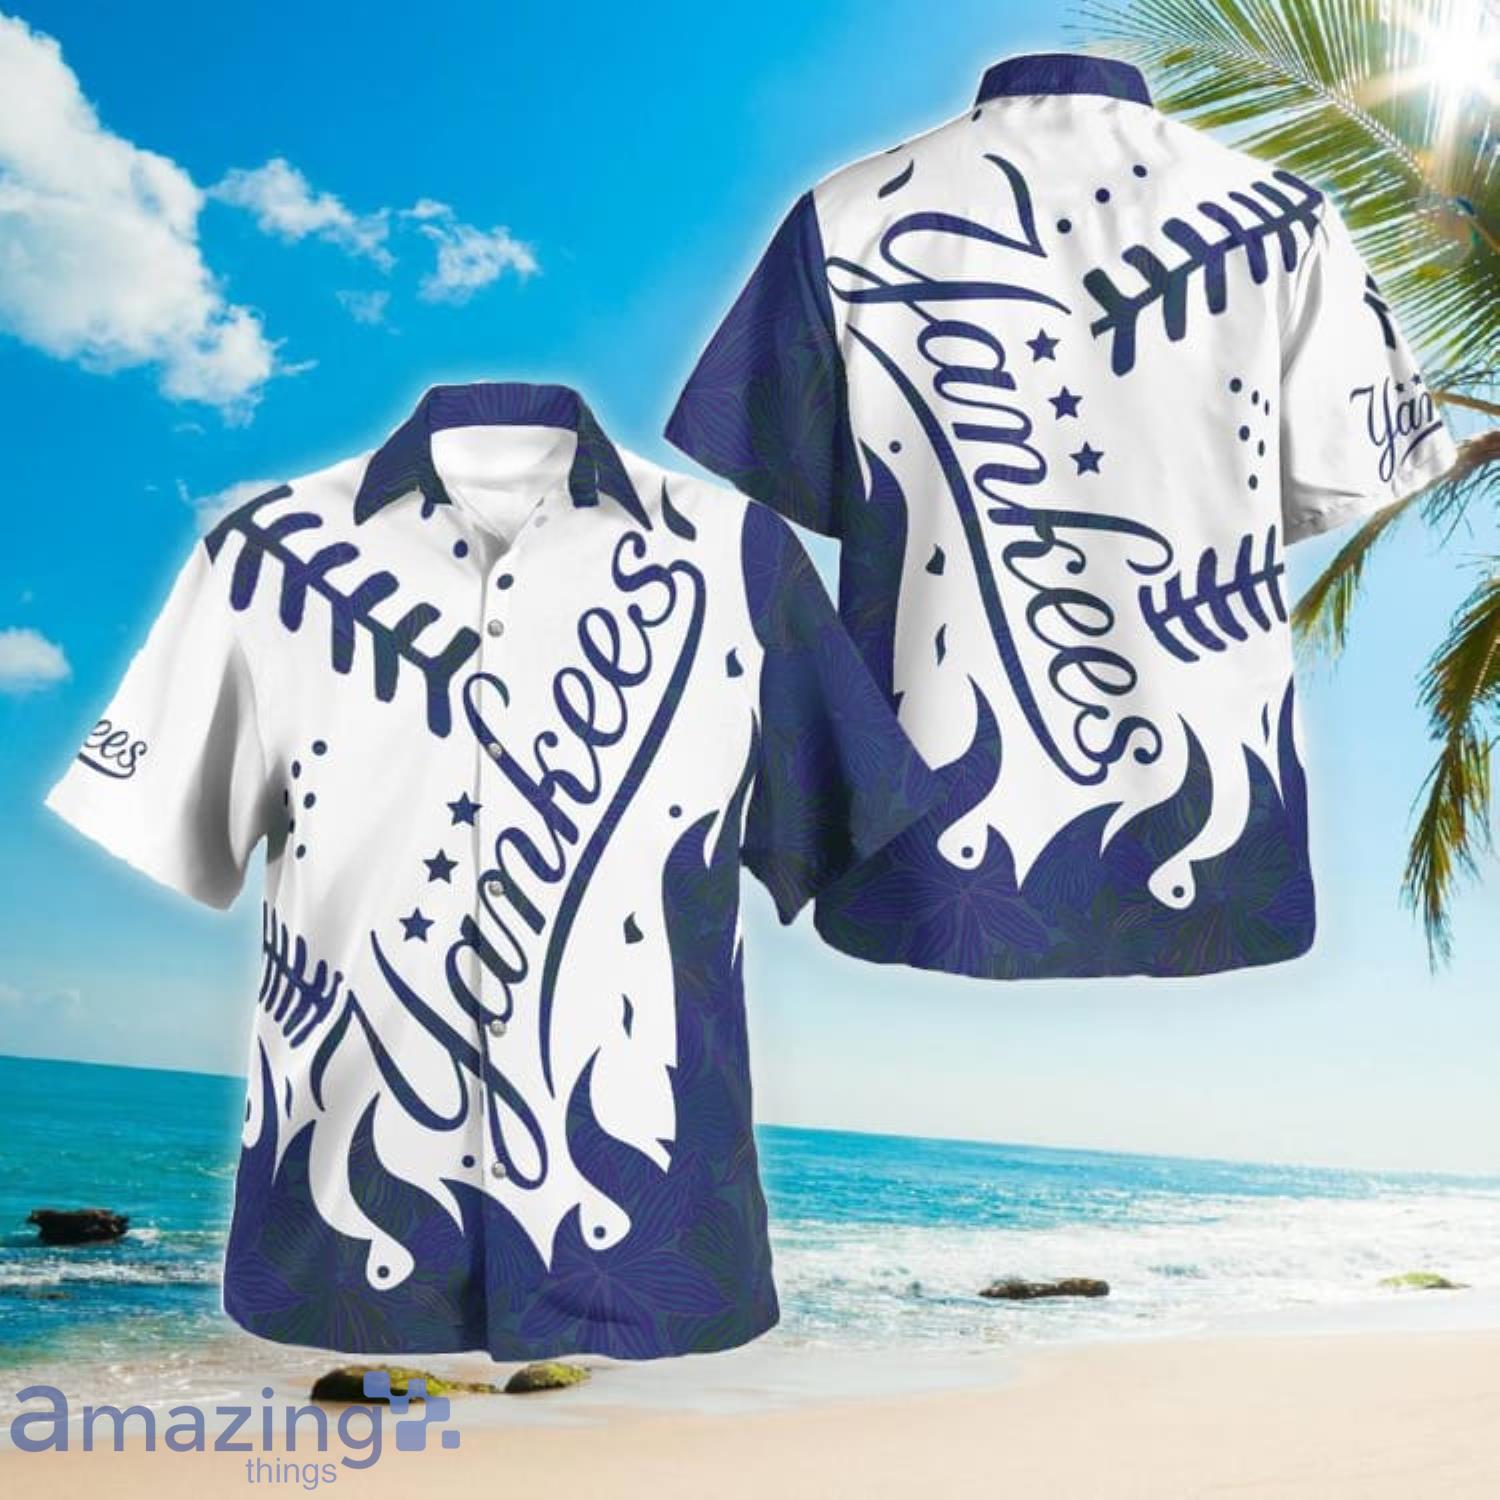 New York Yankees Mlb Floral Hawaiian Shirt Men Youth Yankees Aloha Shirt -  Best Seller Shirts Design In Usa